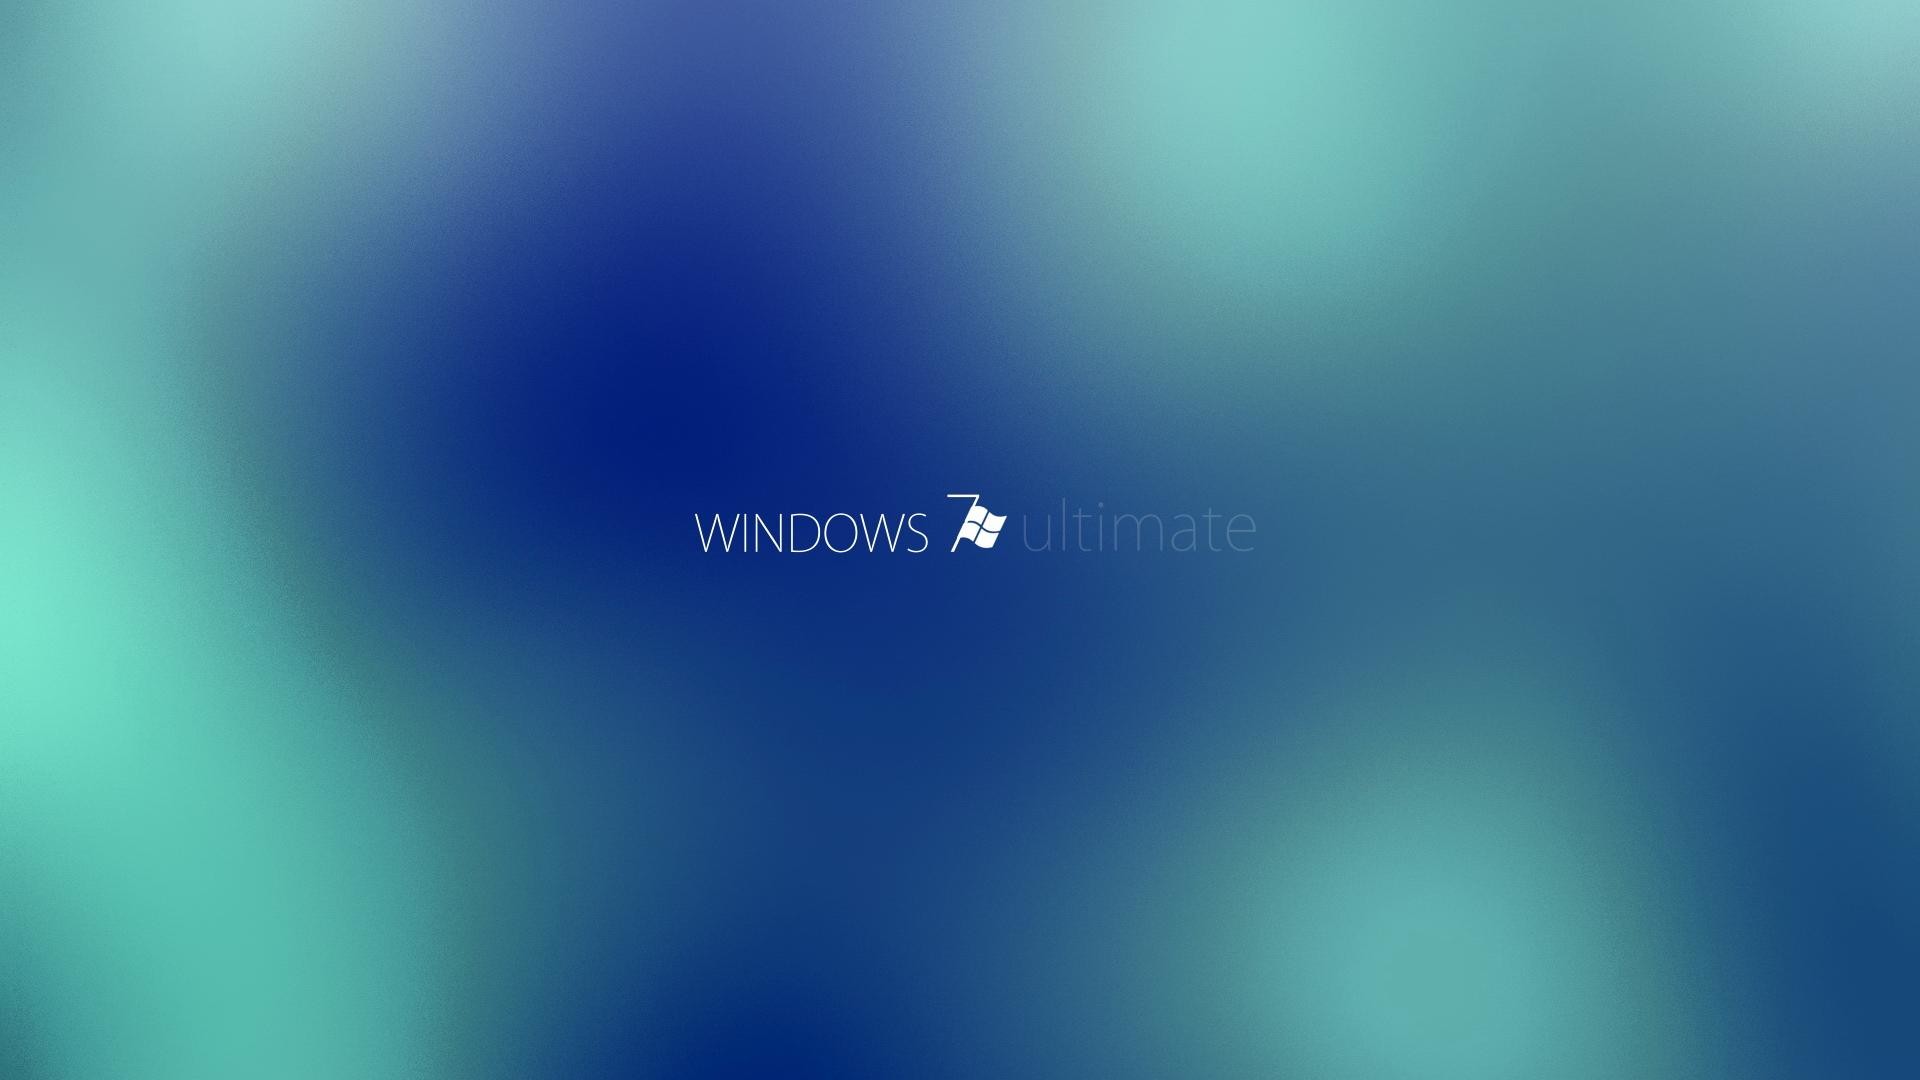 Windows Ultimate Wallpaper HD Image